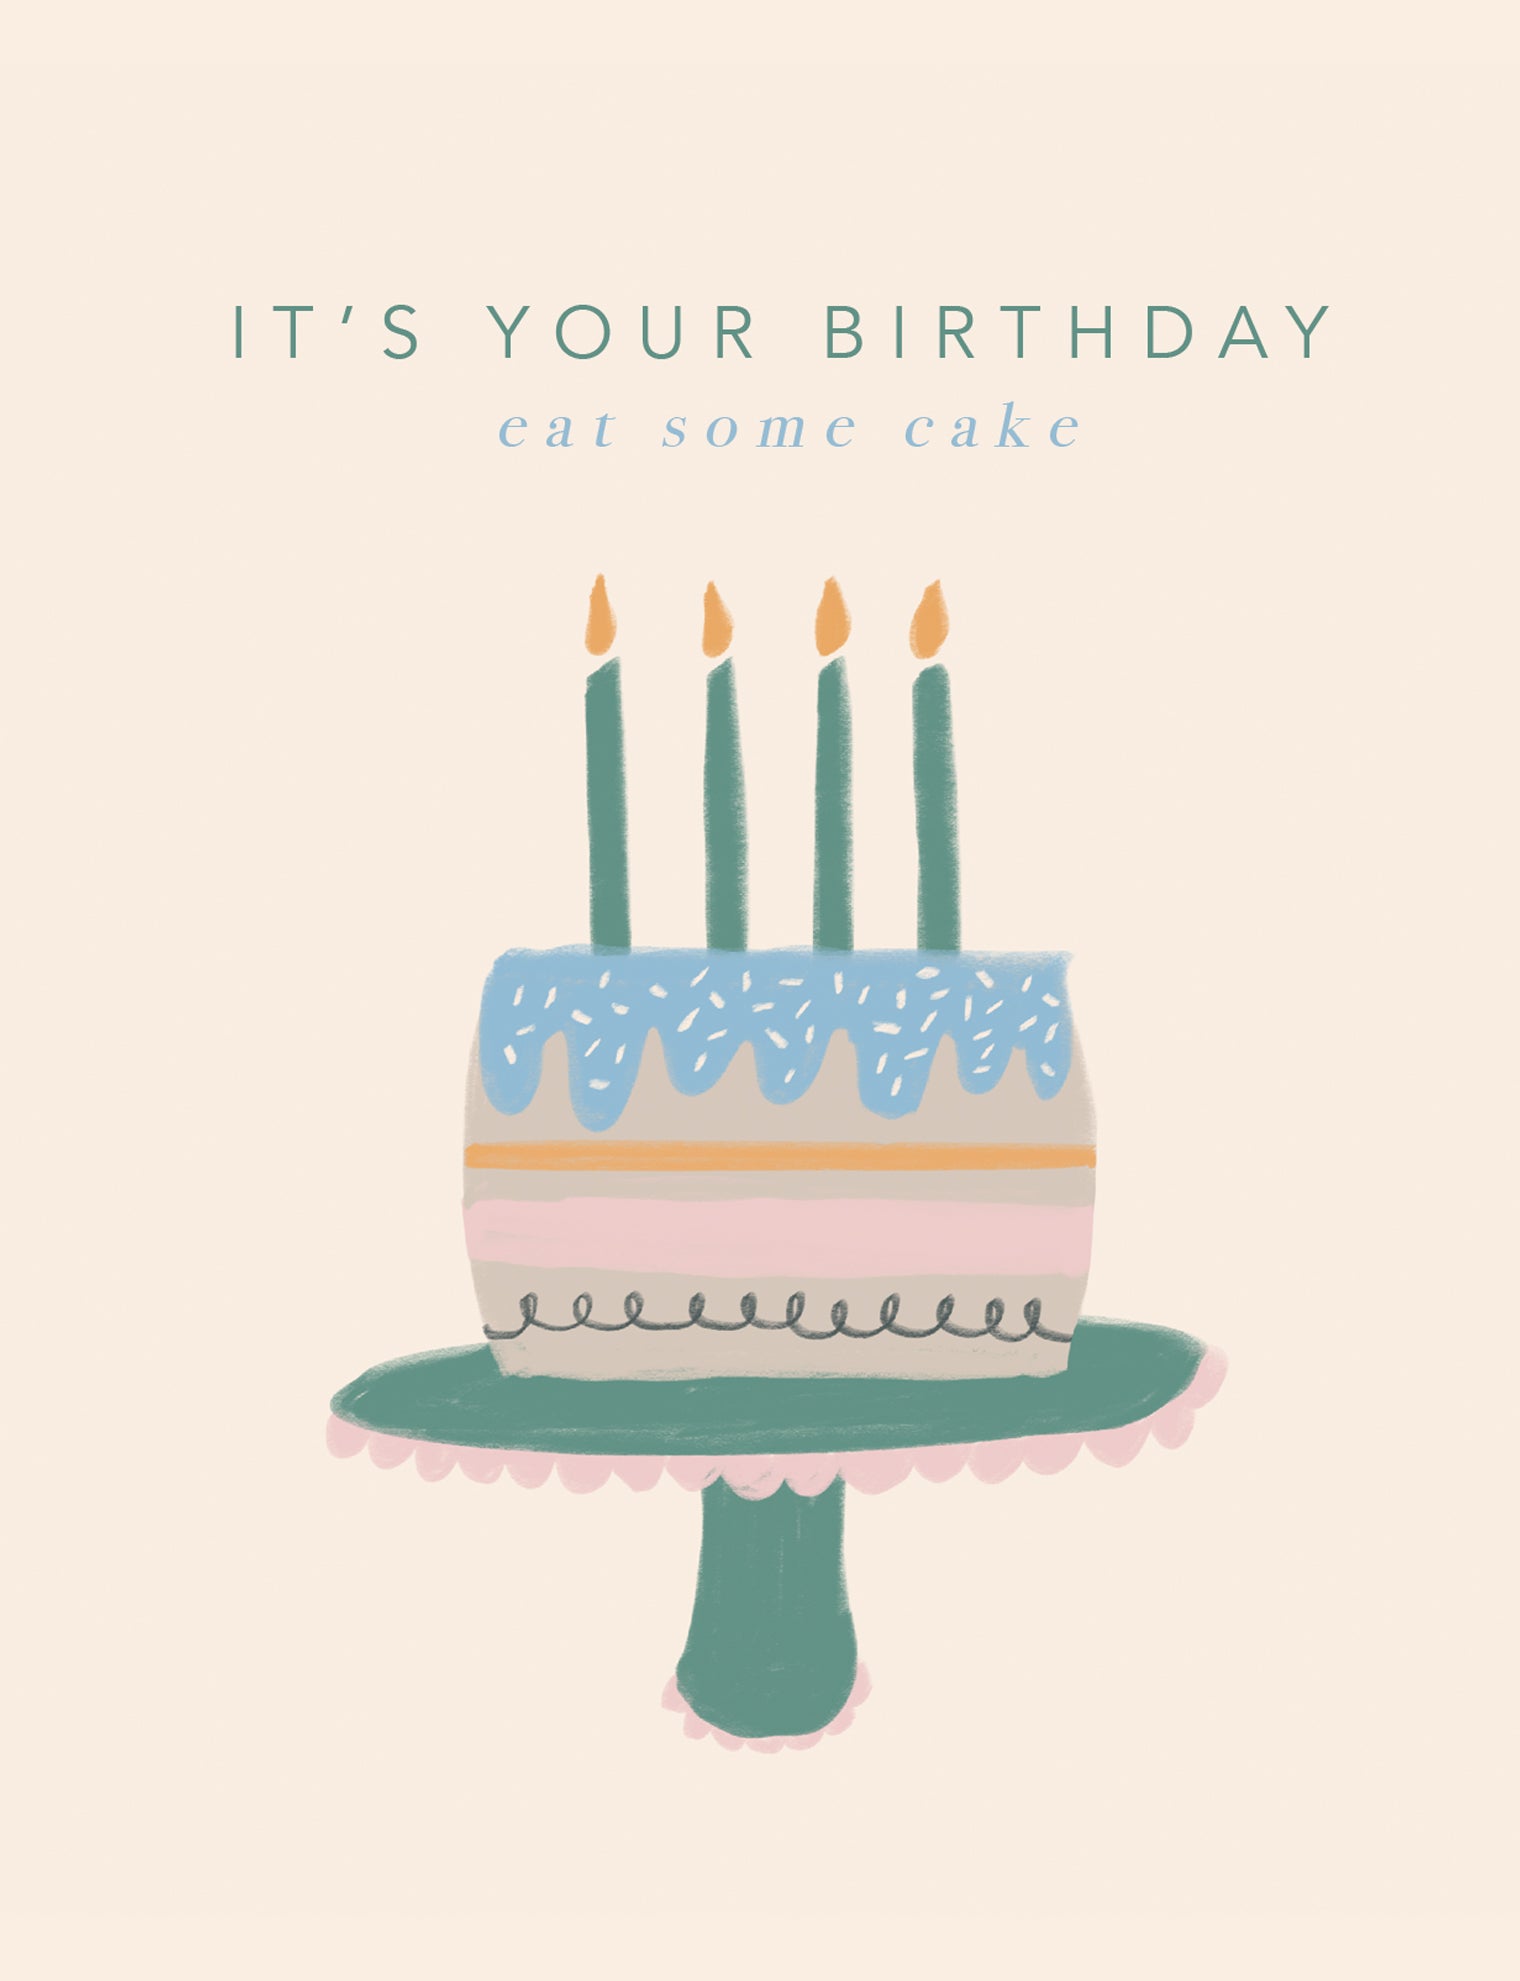 Happy birthday cake chocolate confetti card Vector Image